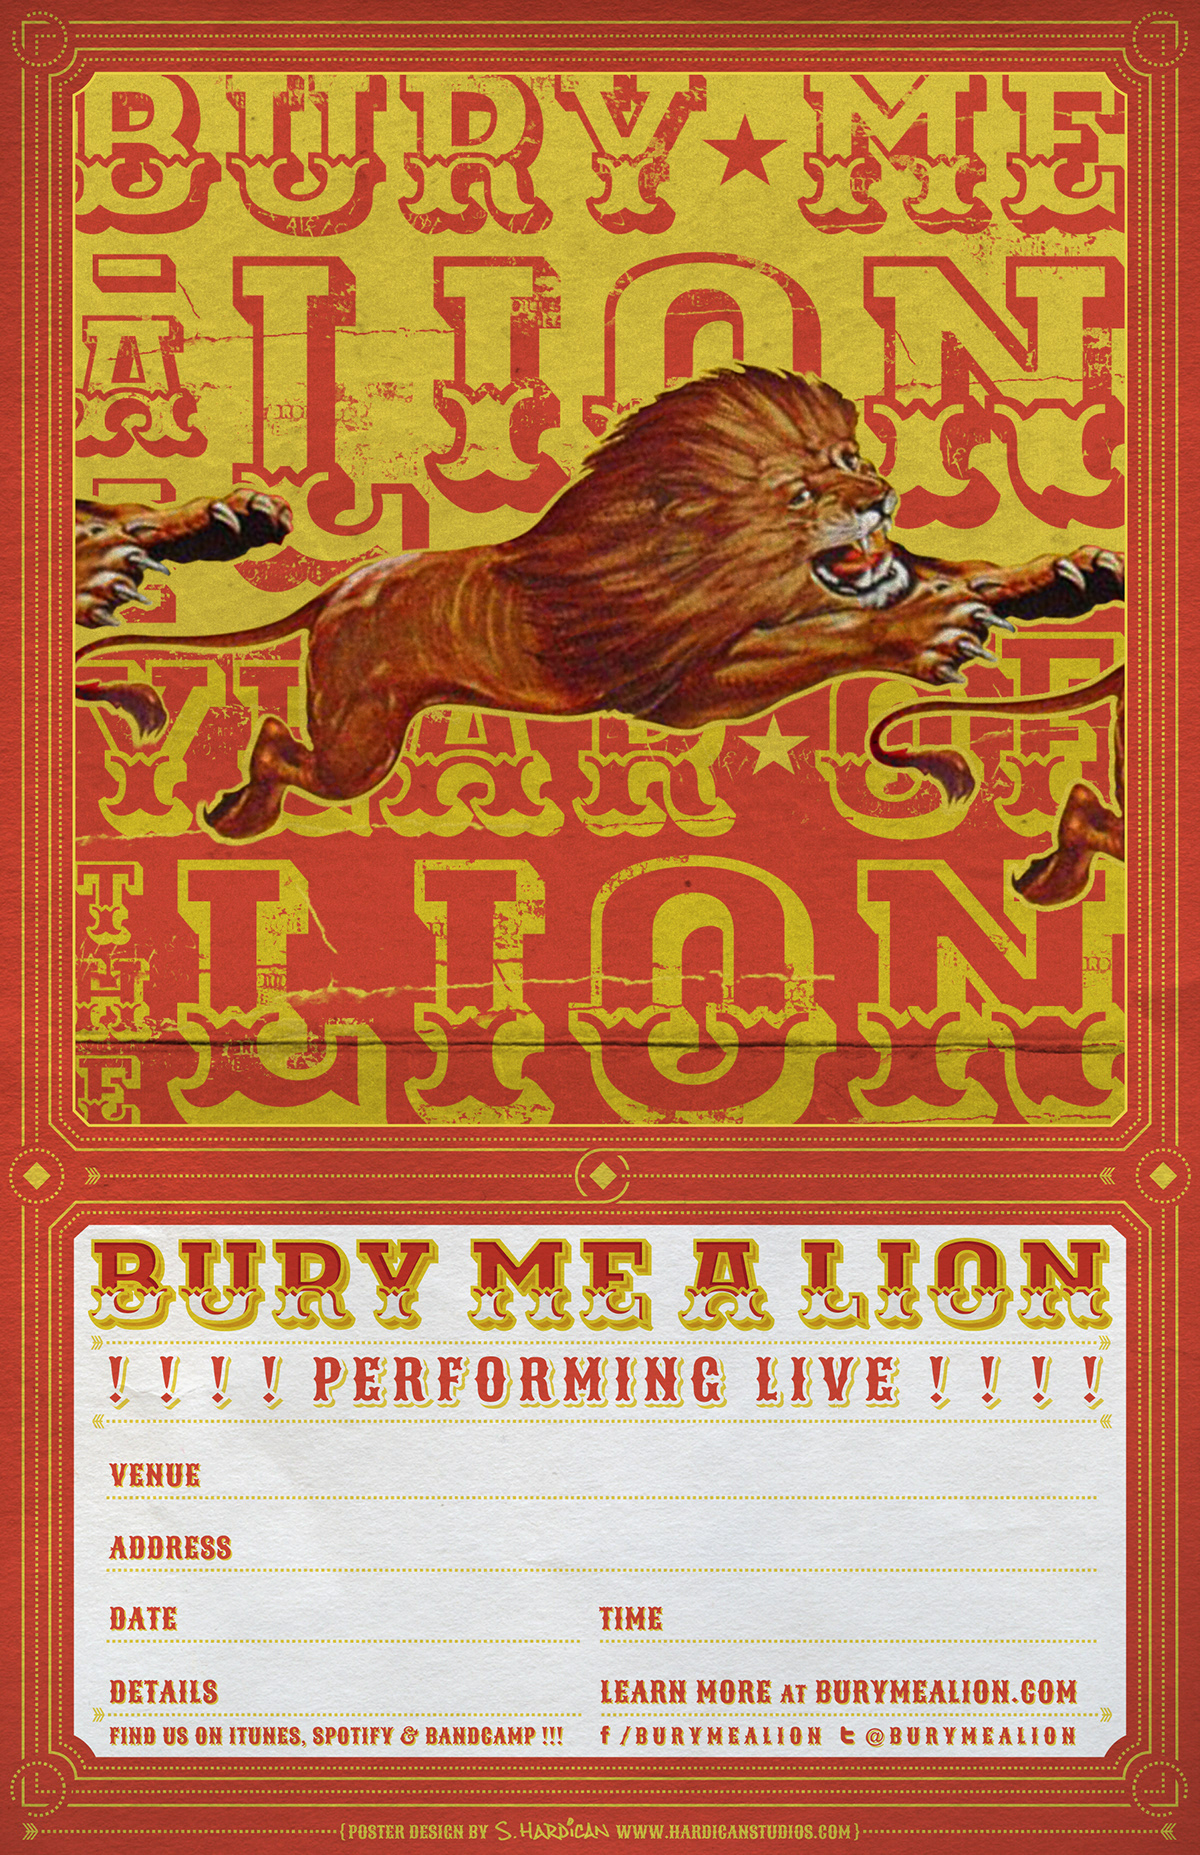 lion new york city Cover Art poster art vintage Circus tiger